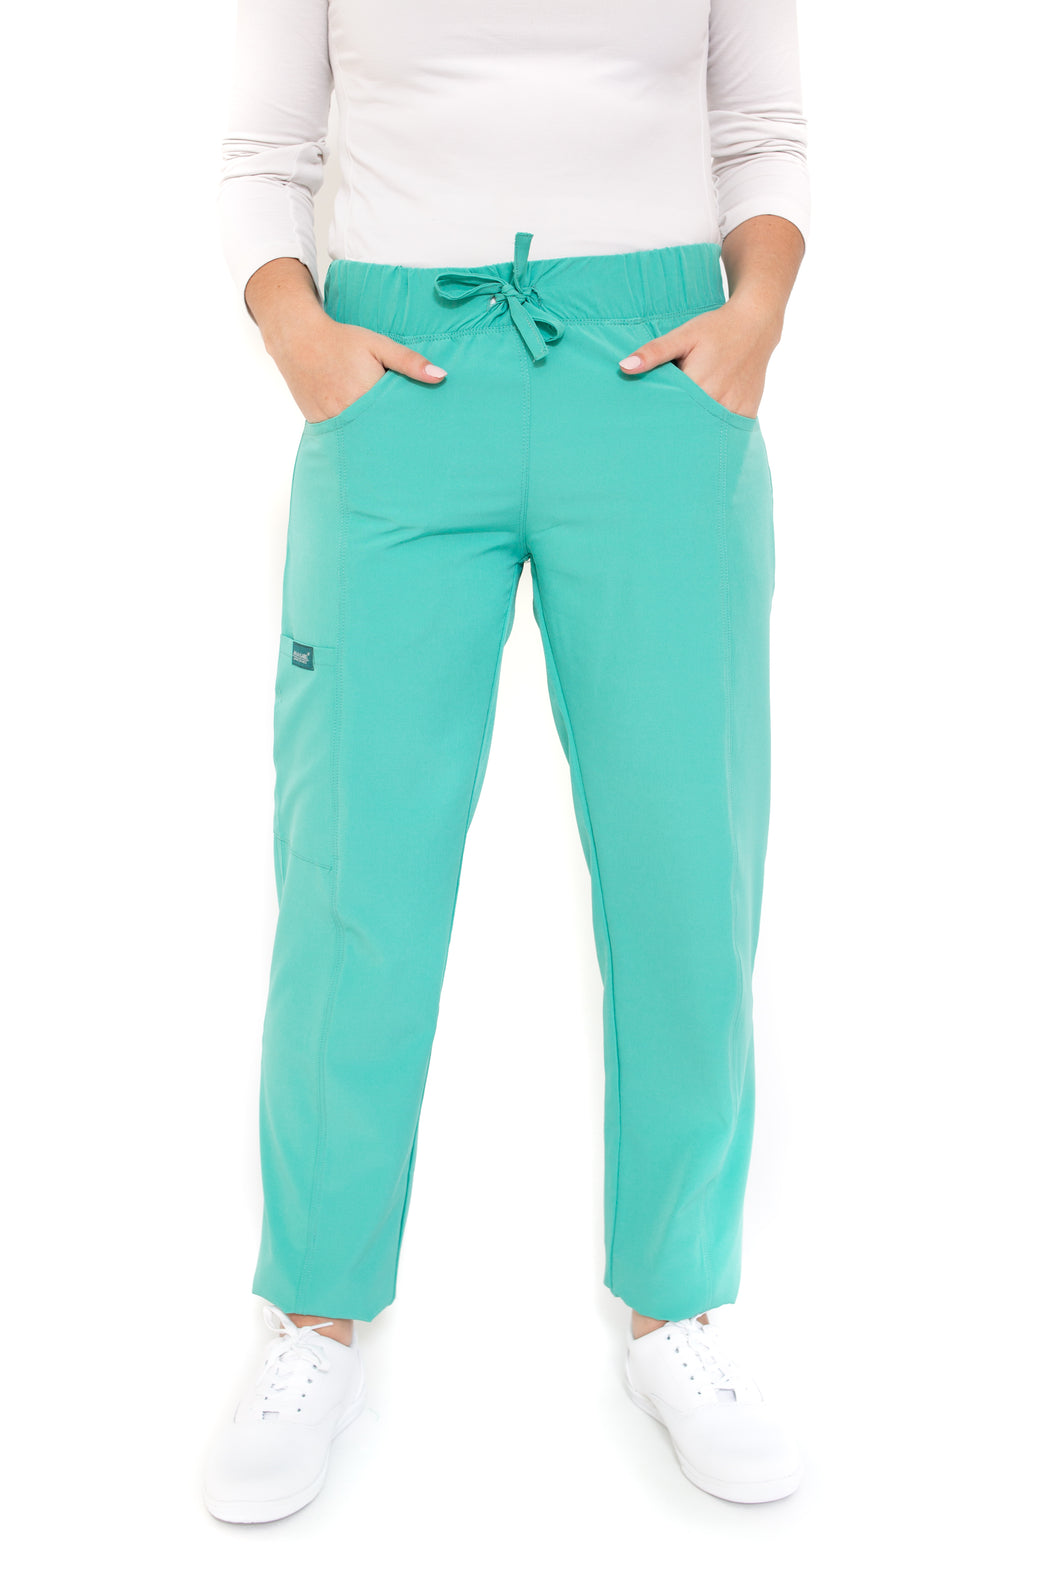 Pantalón Pant EV-120 REPELENTE A FLUIDOS-Color JADE Dama-Ana Isabel Uniformes